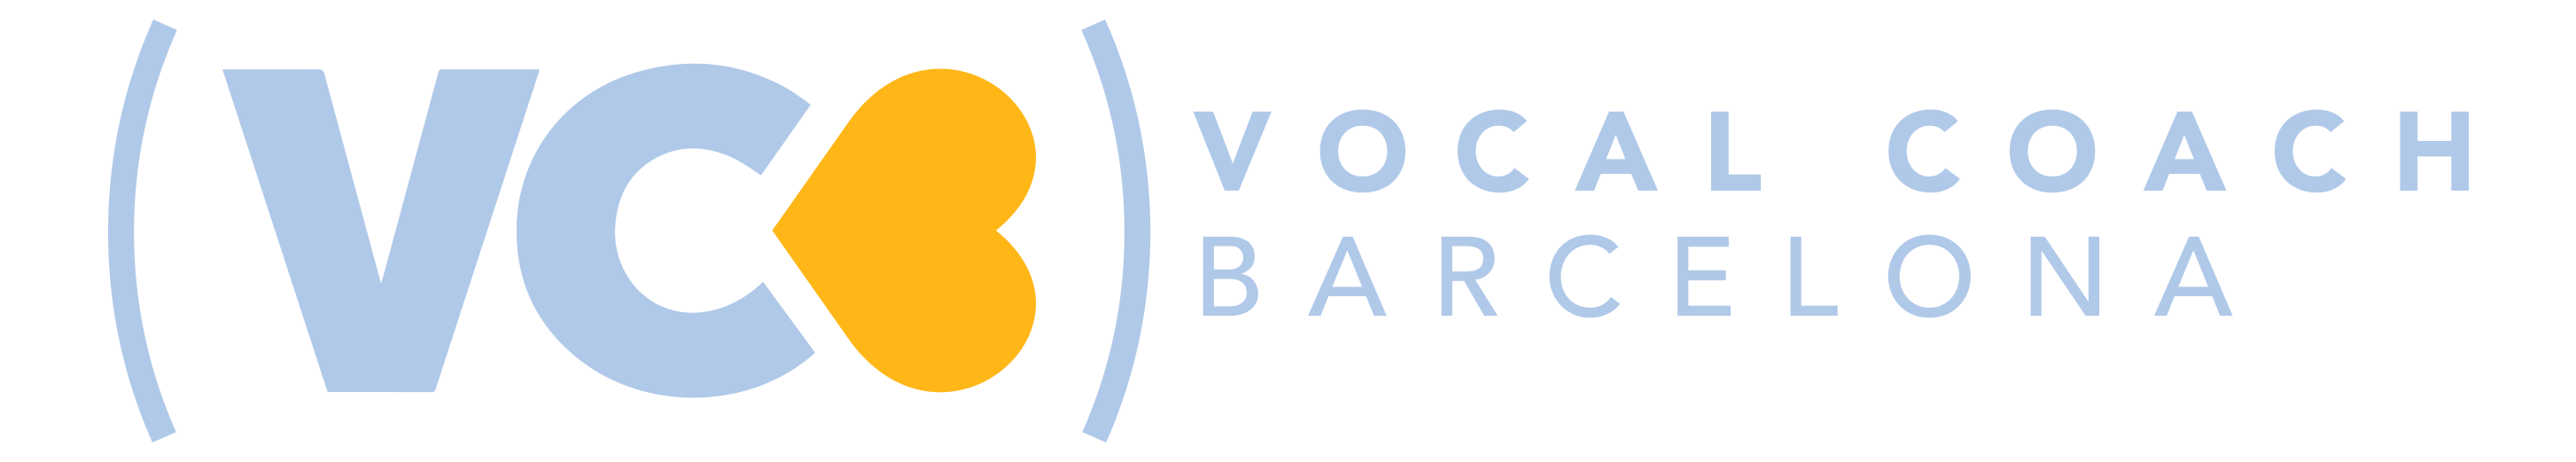 Vocal Coach Barcelona